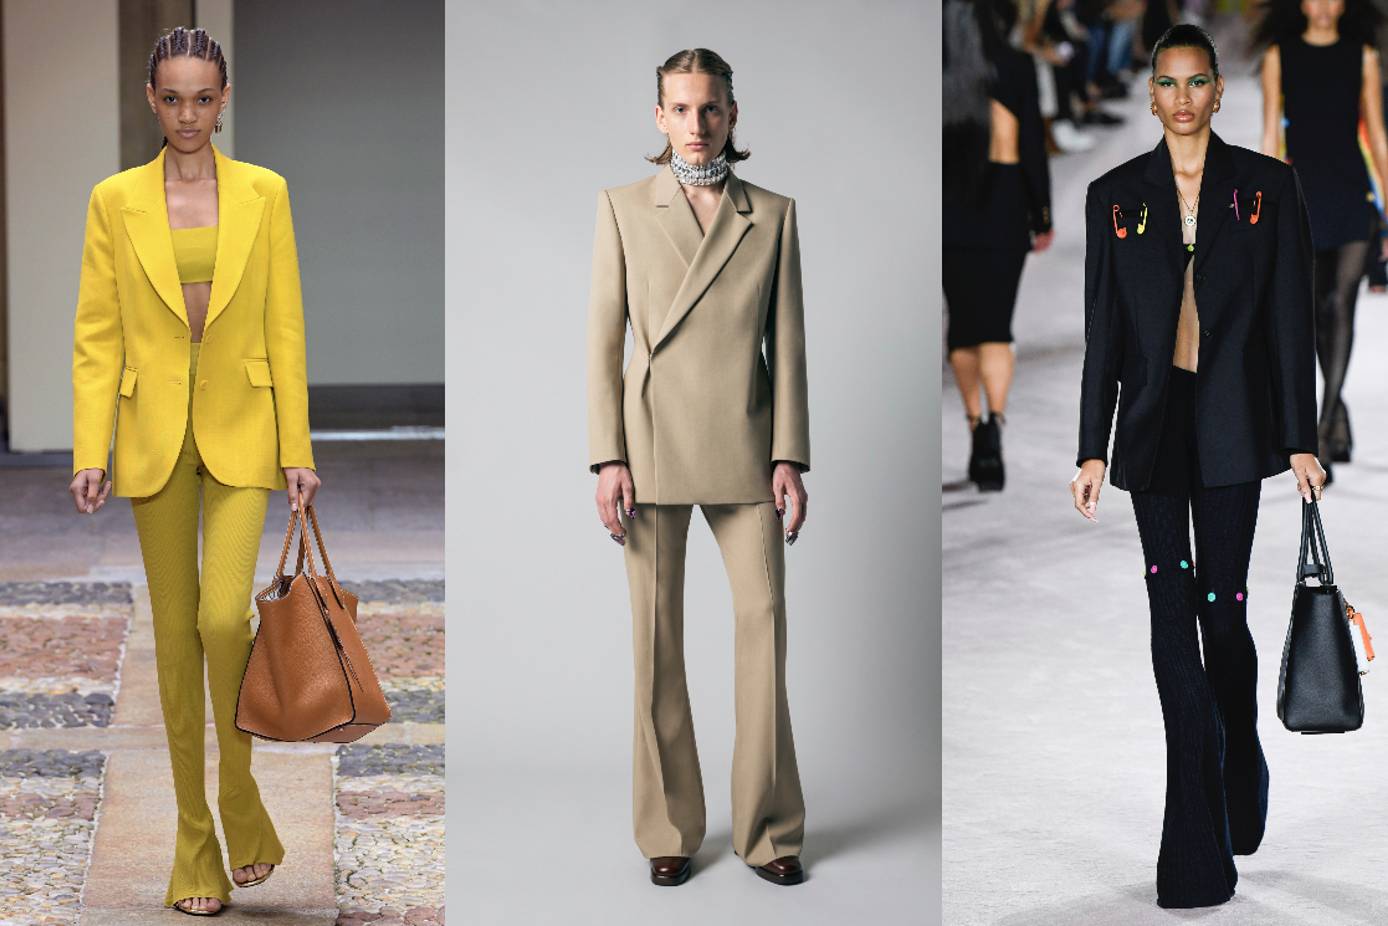 Fashion Style - Los pantalones campana vuelven a la moda 👖😍